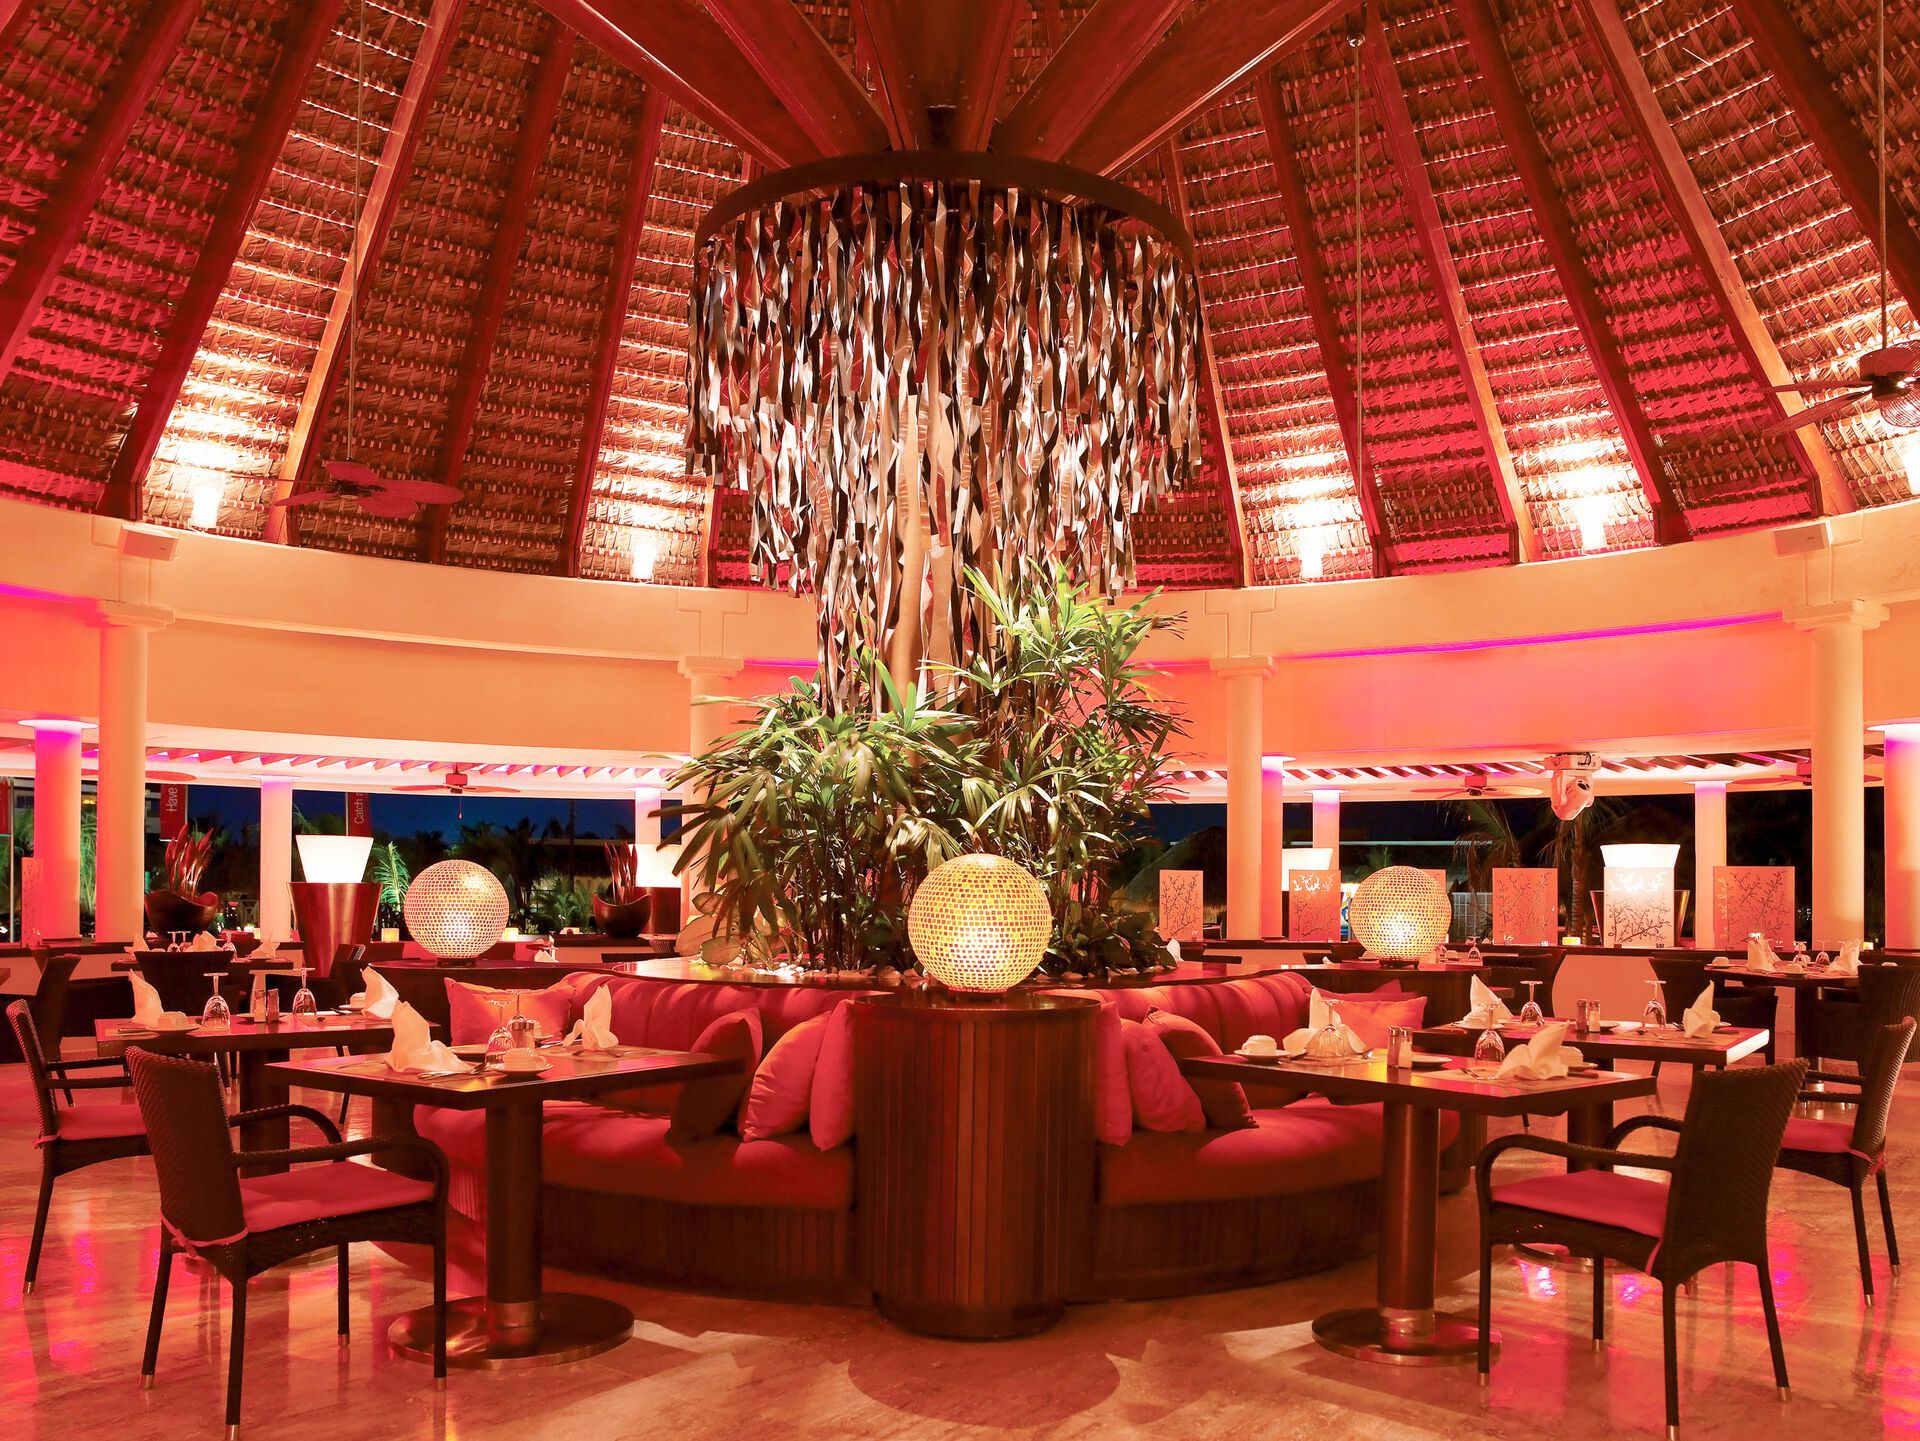 République Dominicaine - Punta Cana - Hotel The Reserve at Paradisus Palma Real 5*